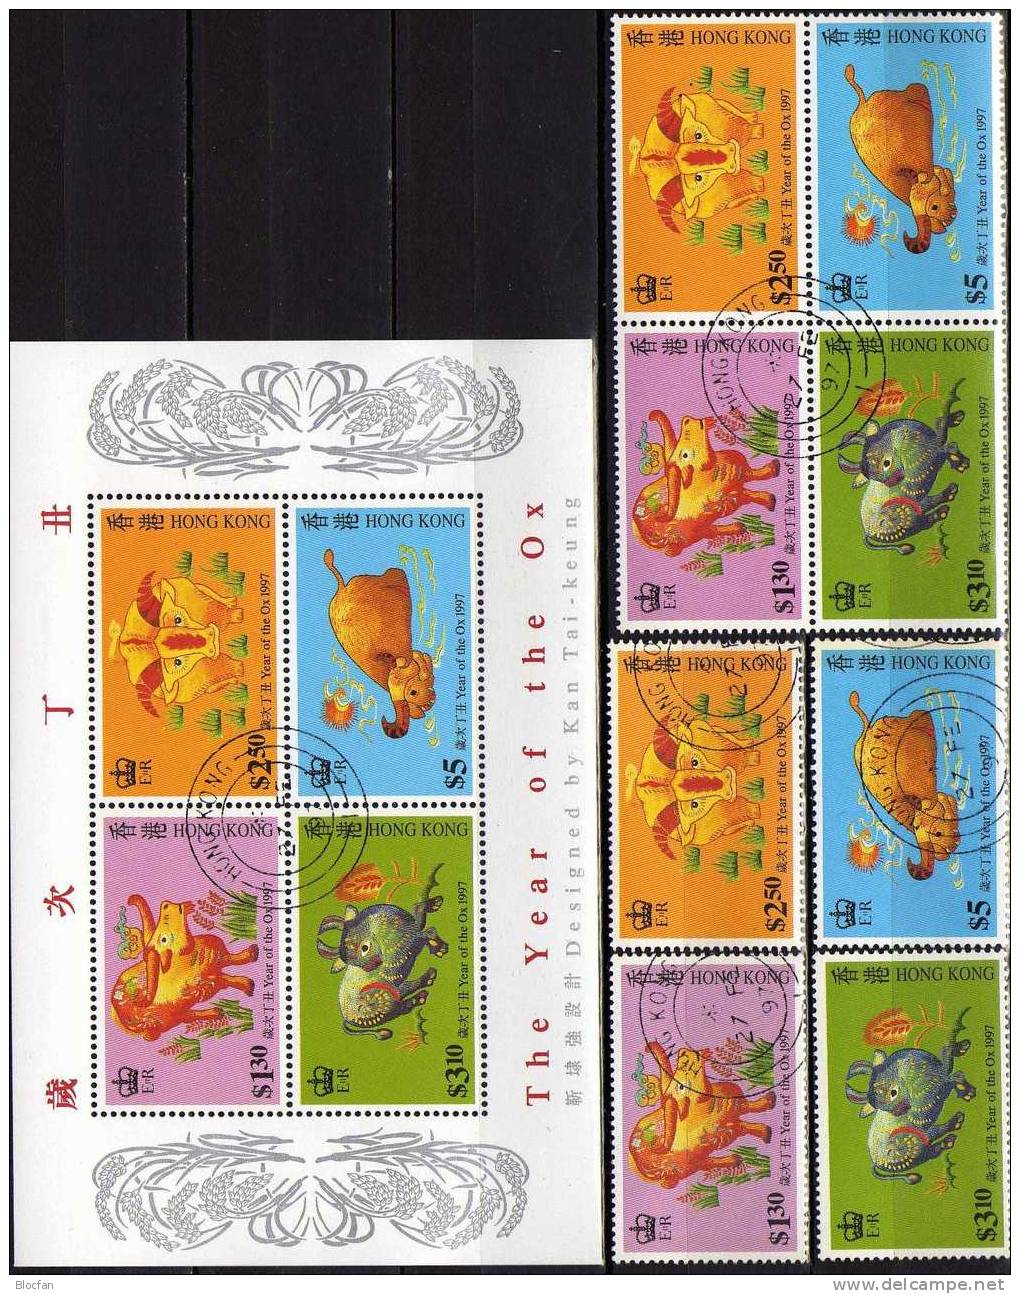 Year of the Ox 1997 Hongkong 785/8, ZD, Block 45 ** plus o 27€ Chinesisches Neujahr Stickerei bloc sheet from HONG KONG